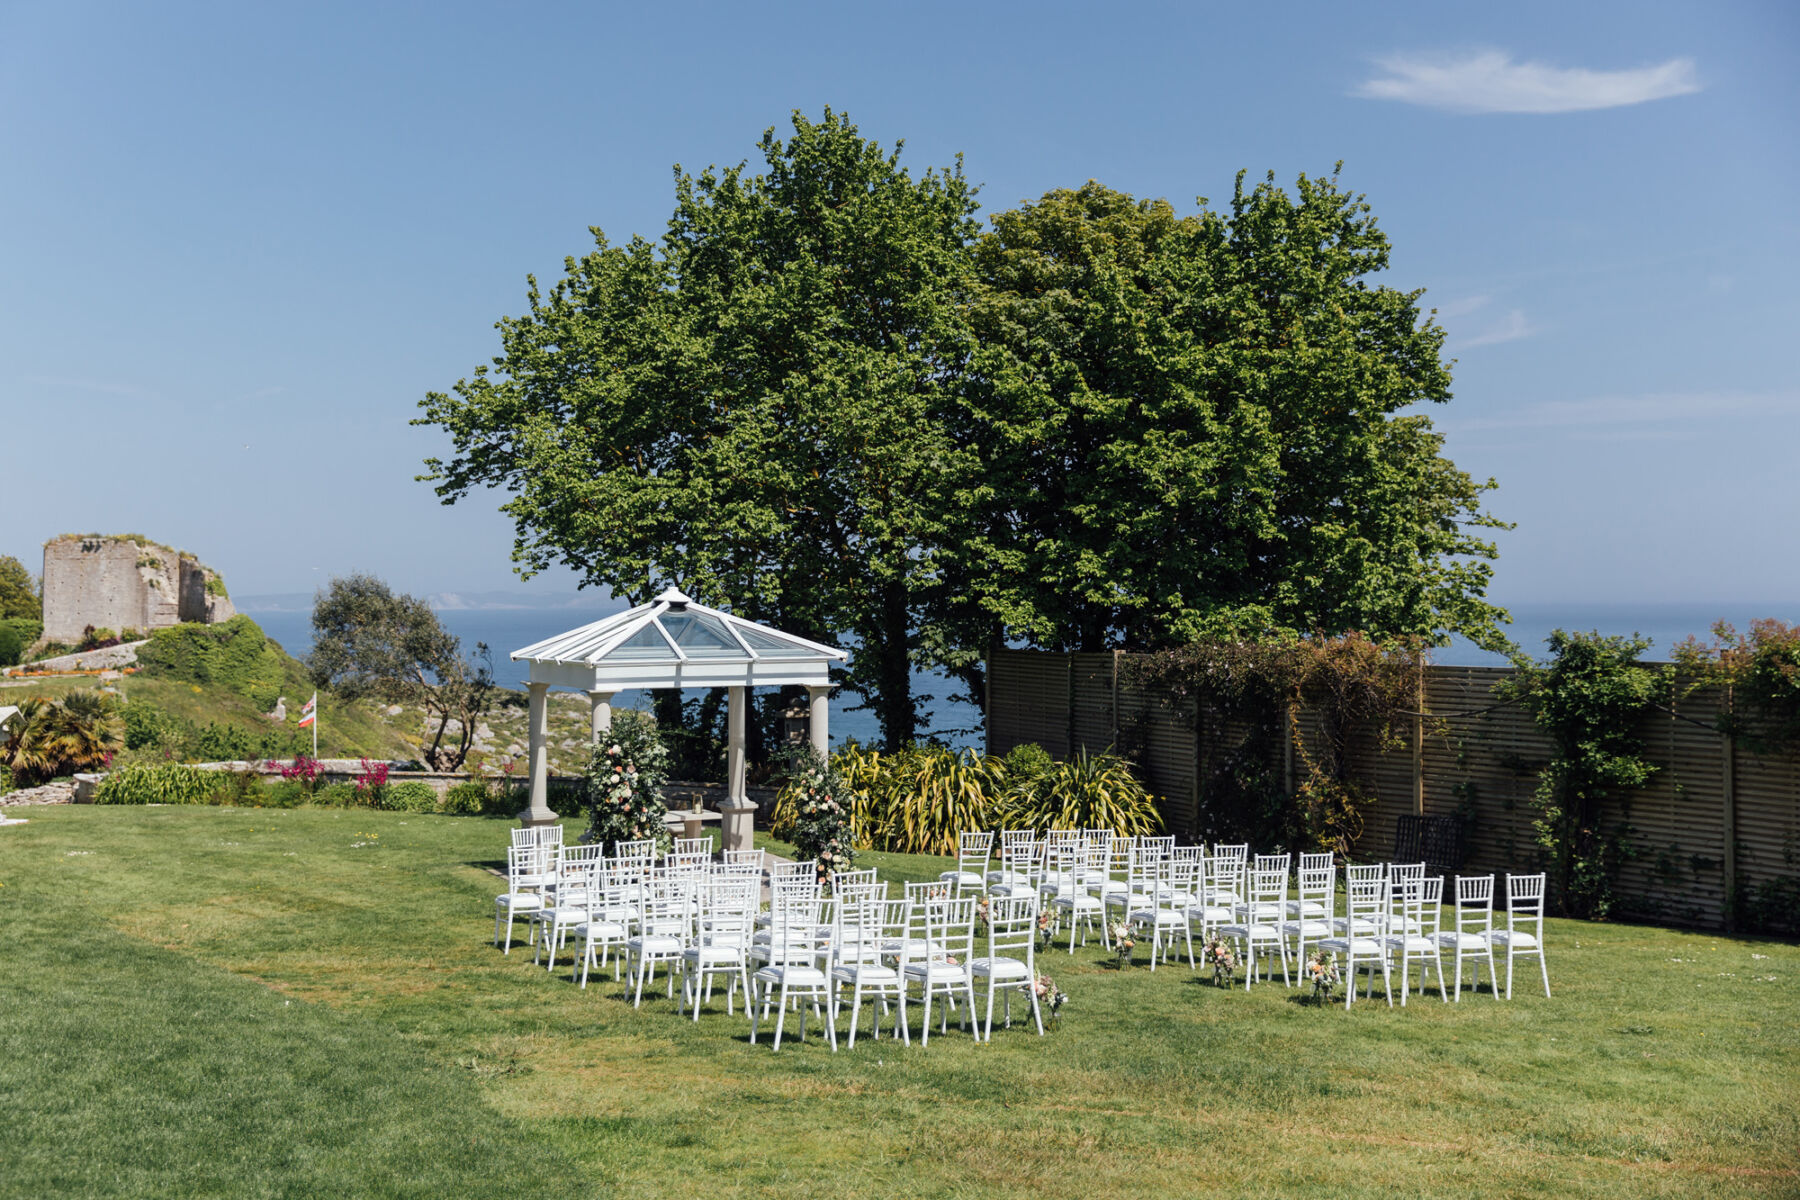 Outdoor wedding ceremony setup at The Pennsylvania Castle Estate - a Dorset wedding venue on a clifftop with incredible sea views.